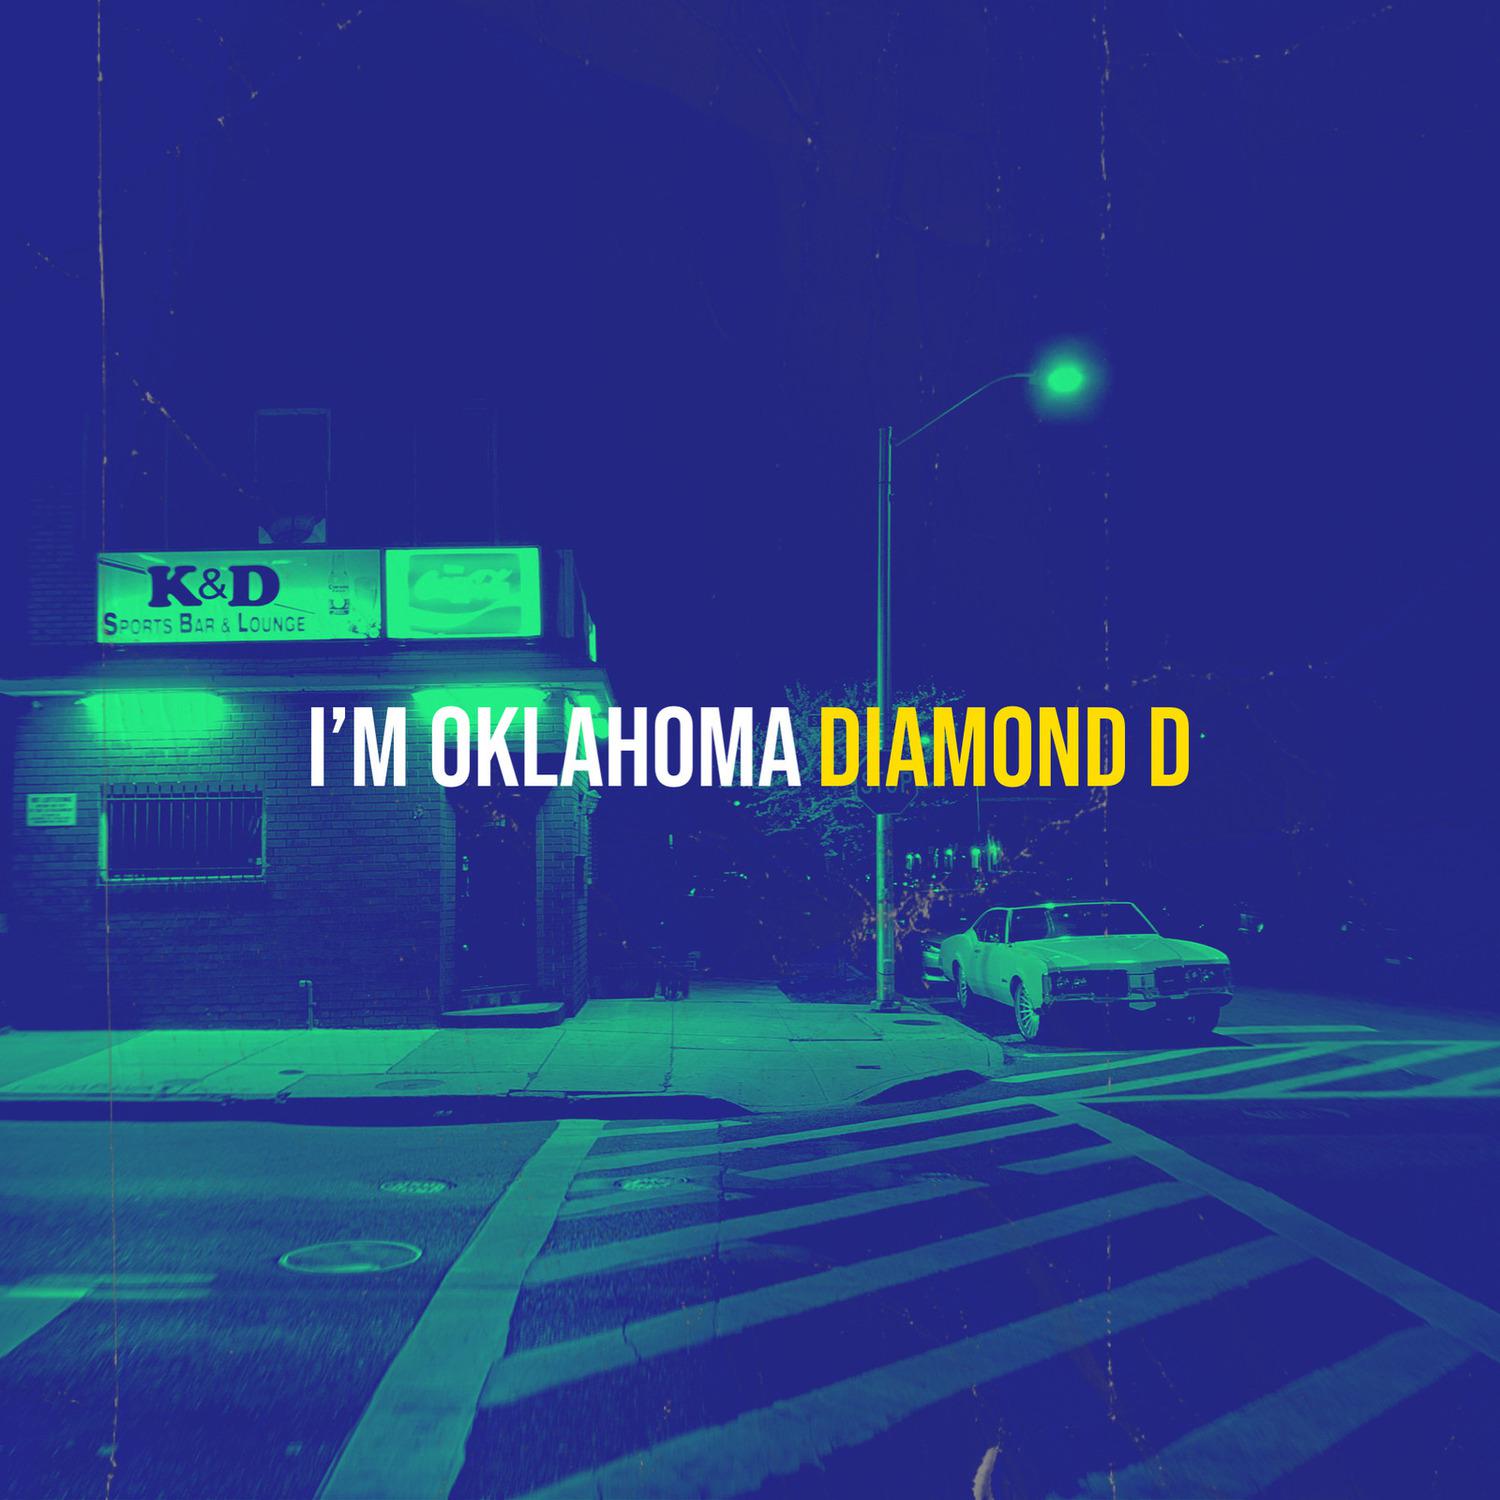 M ok p. Oklahoma Diamond. Diamond d - Hatred, passions and Infidelity.